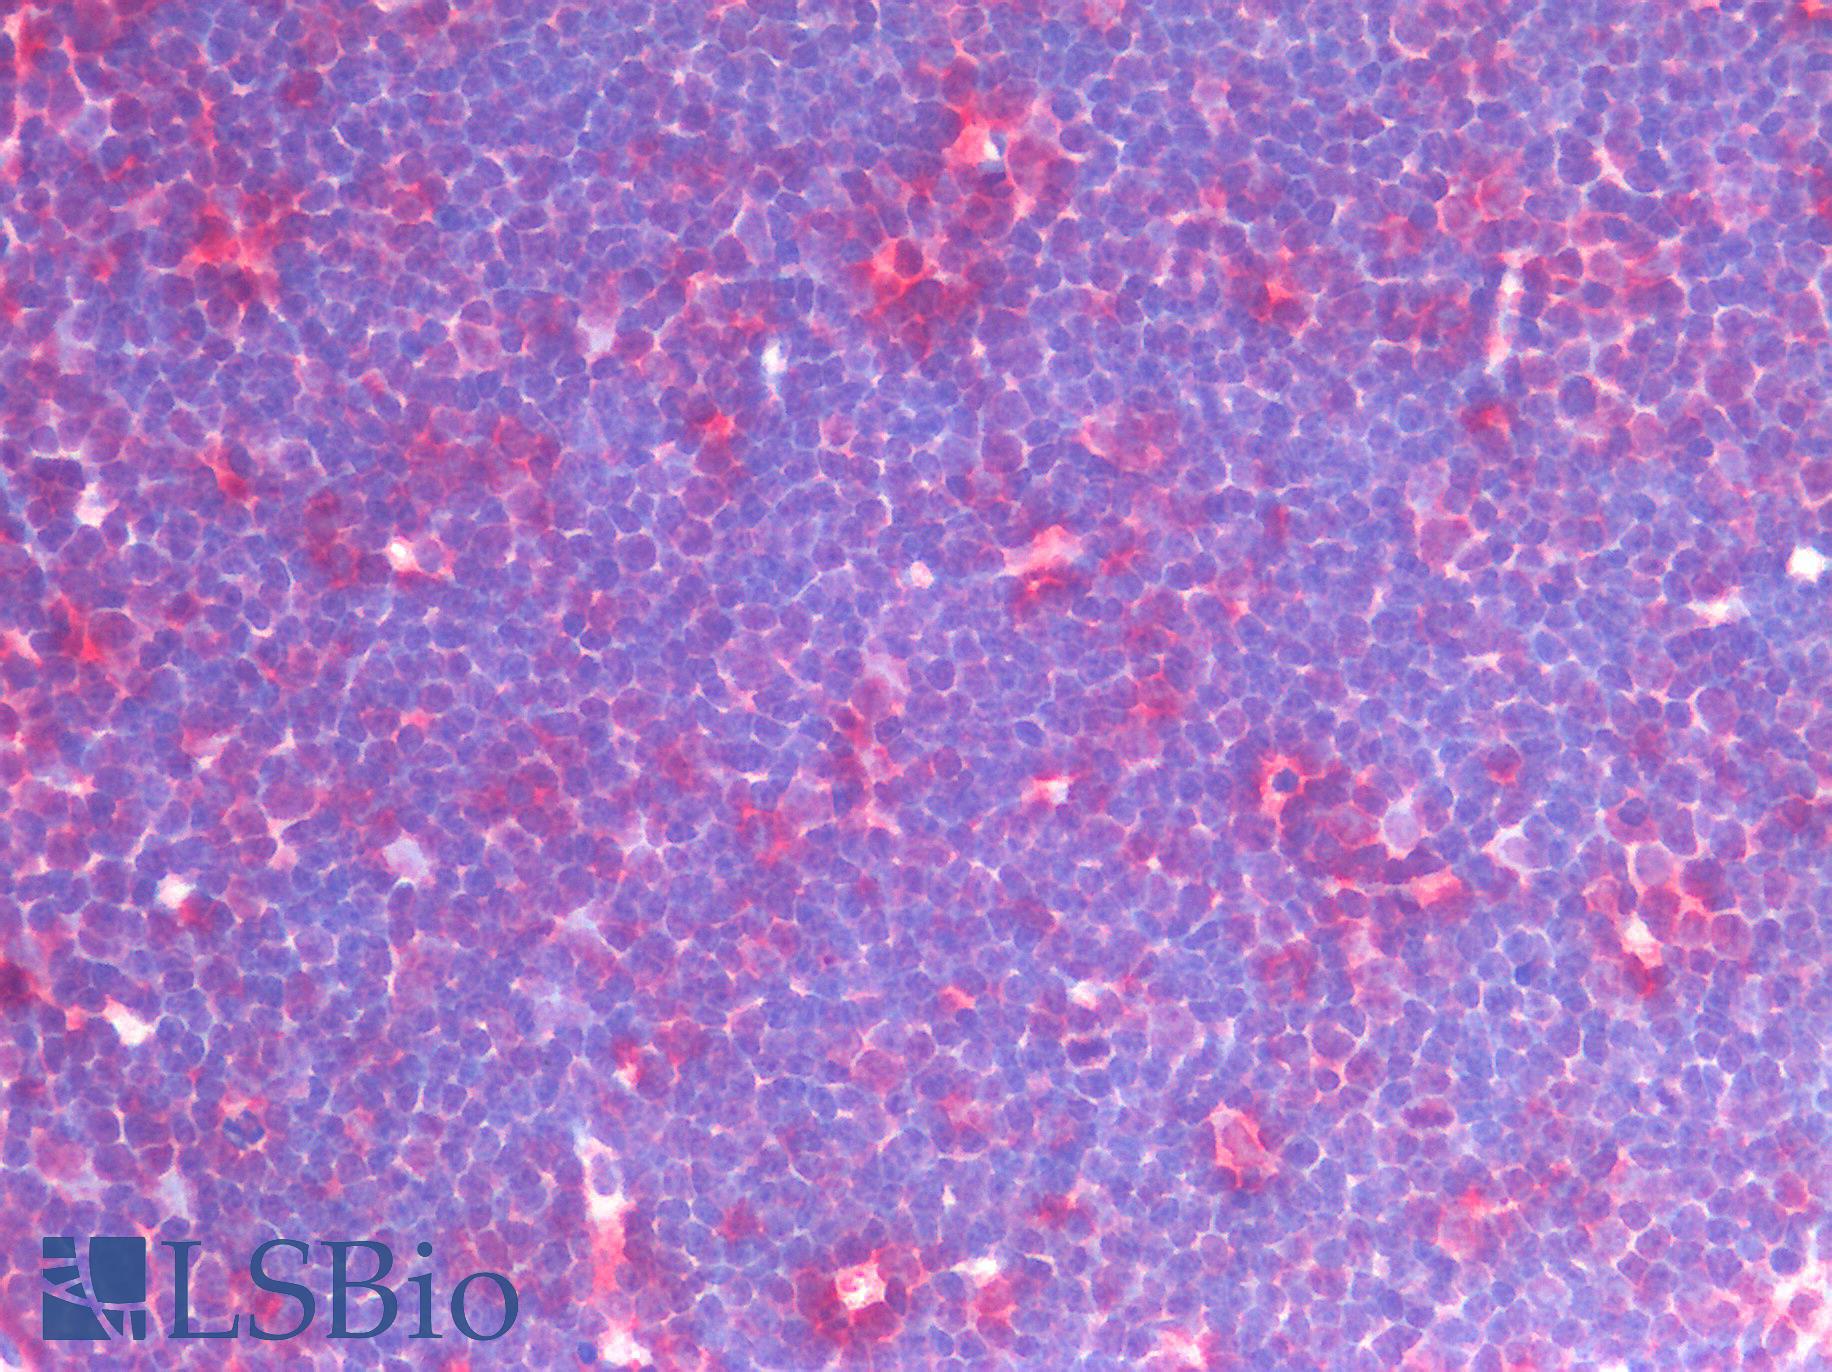 CD33 Antibody - Human Thymus: Formalin-Fixed, Paraffin-Embedded (FFPE)